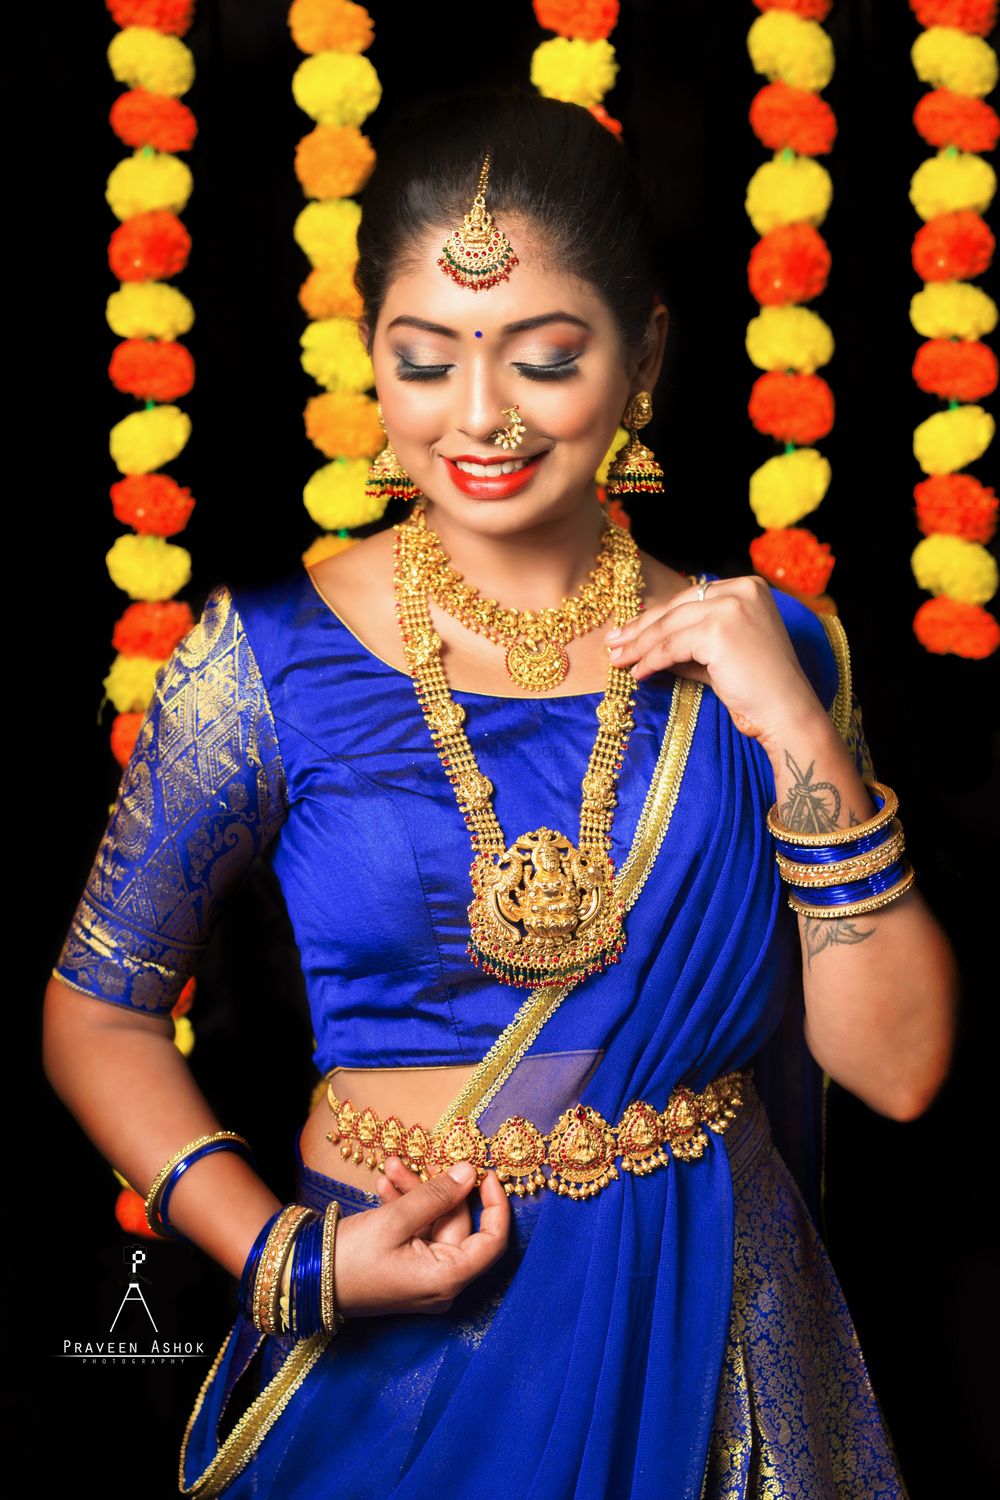 Photo By Praveen Ashok Photography- Pre Wedding Photography - Pre Wedding Photographers